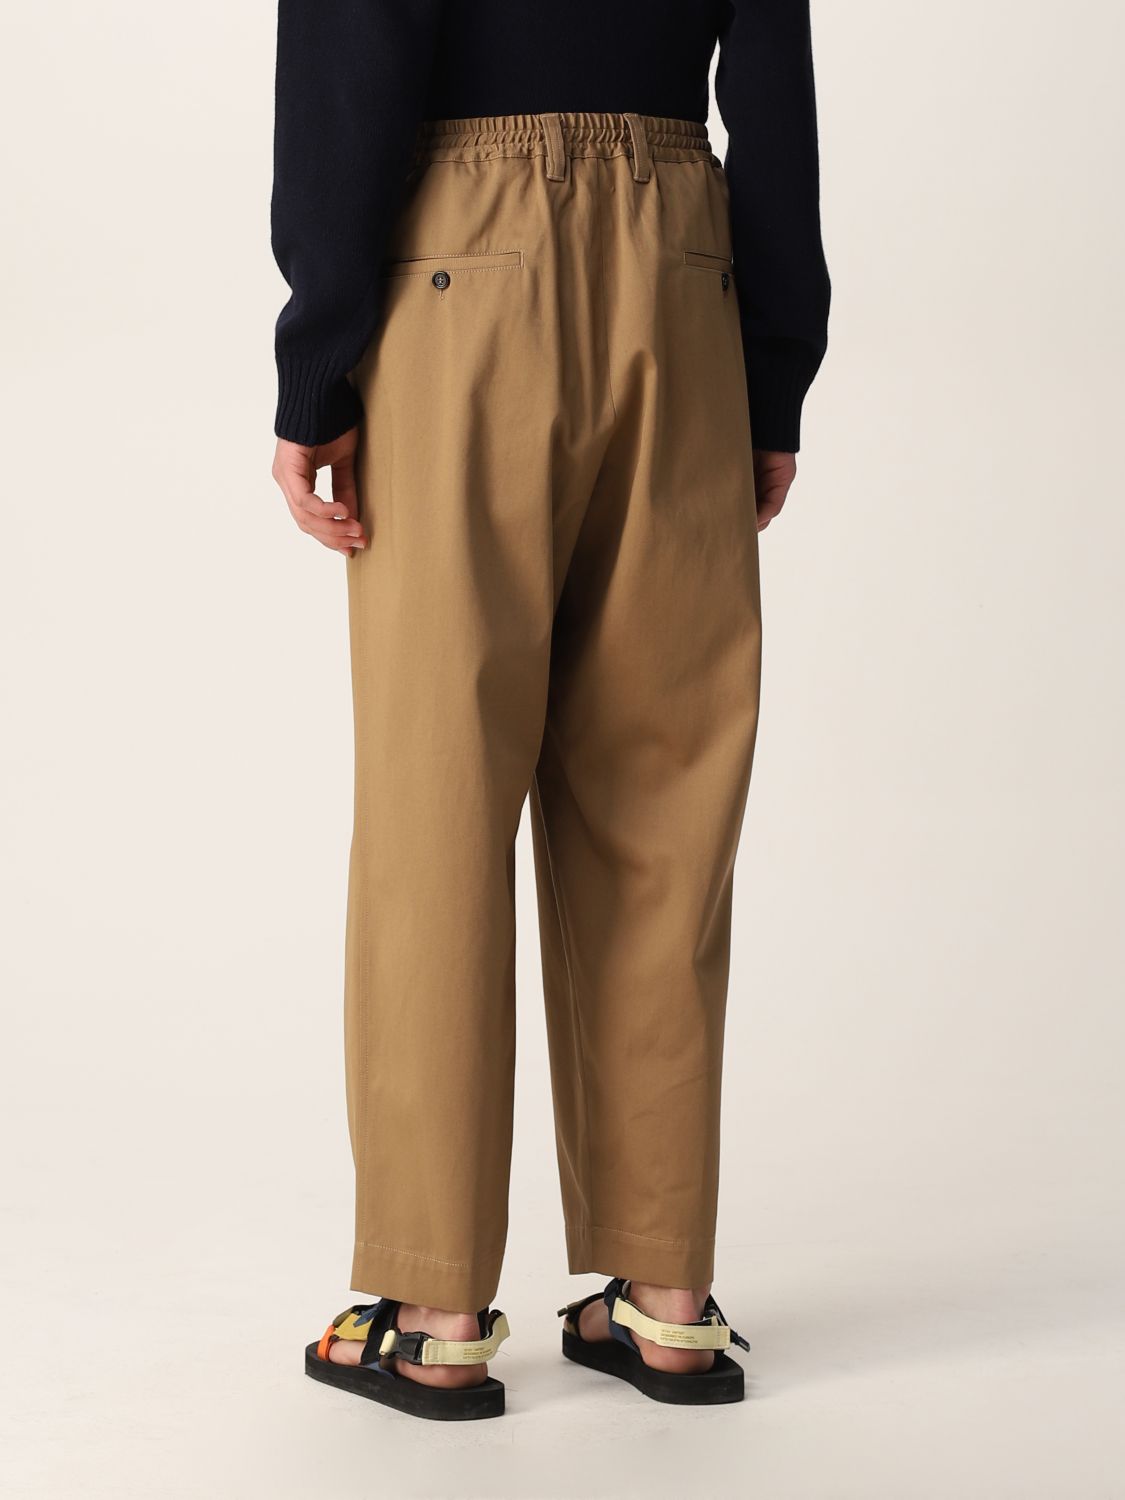 MARNI: cotton gabardine pants - Beige | Marni pants PUMU0017A0UTC084 ...